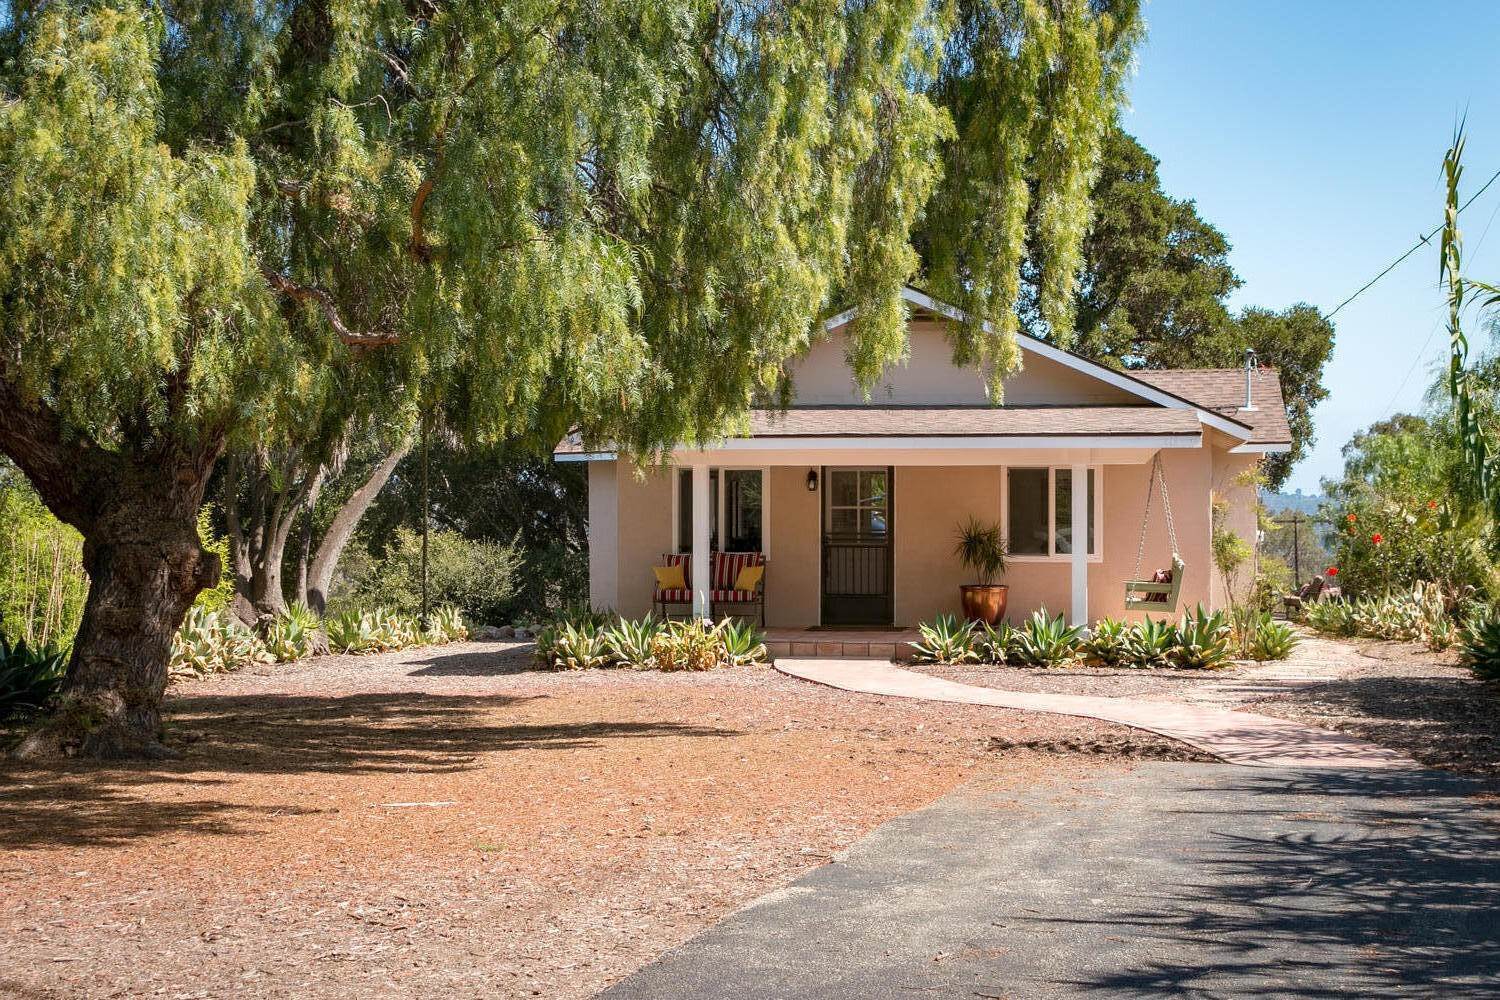 2. Estate for Sale at 4399 La Paloma Avenue Santa Barbara, California 93105 United States